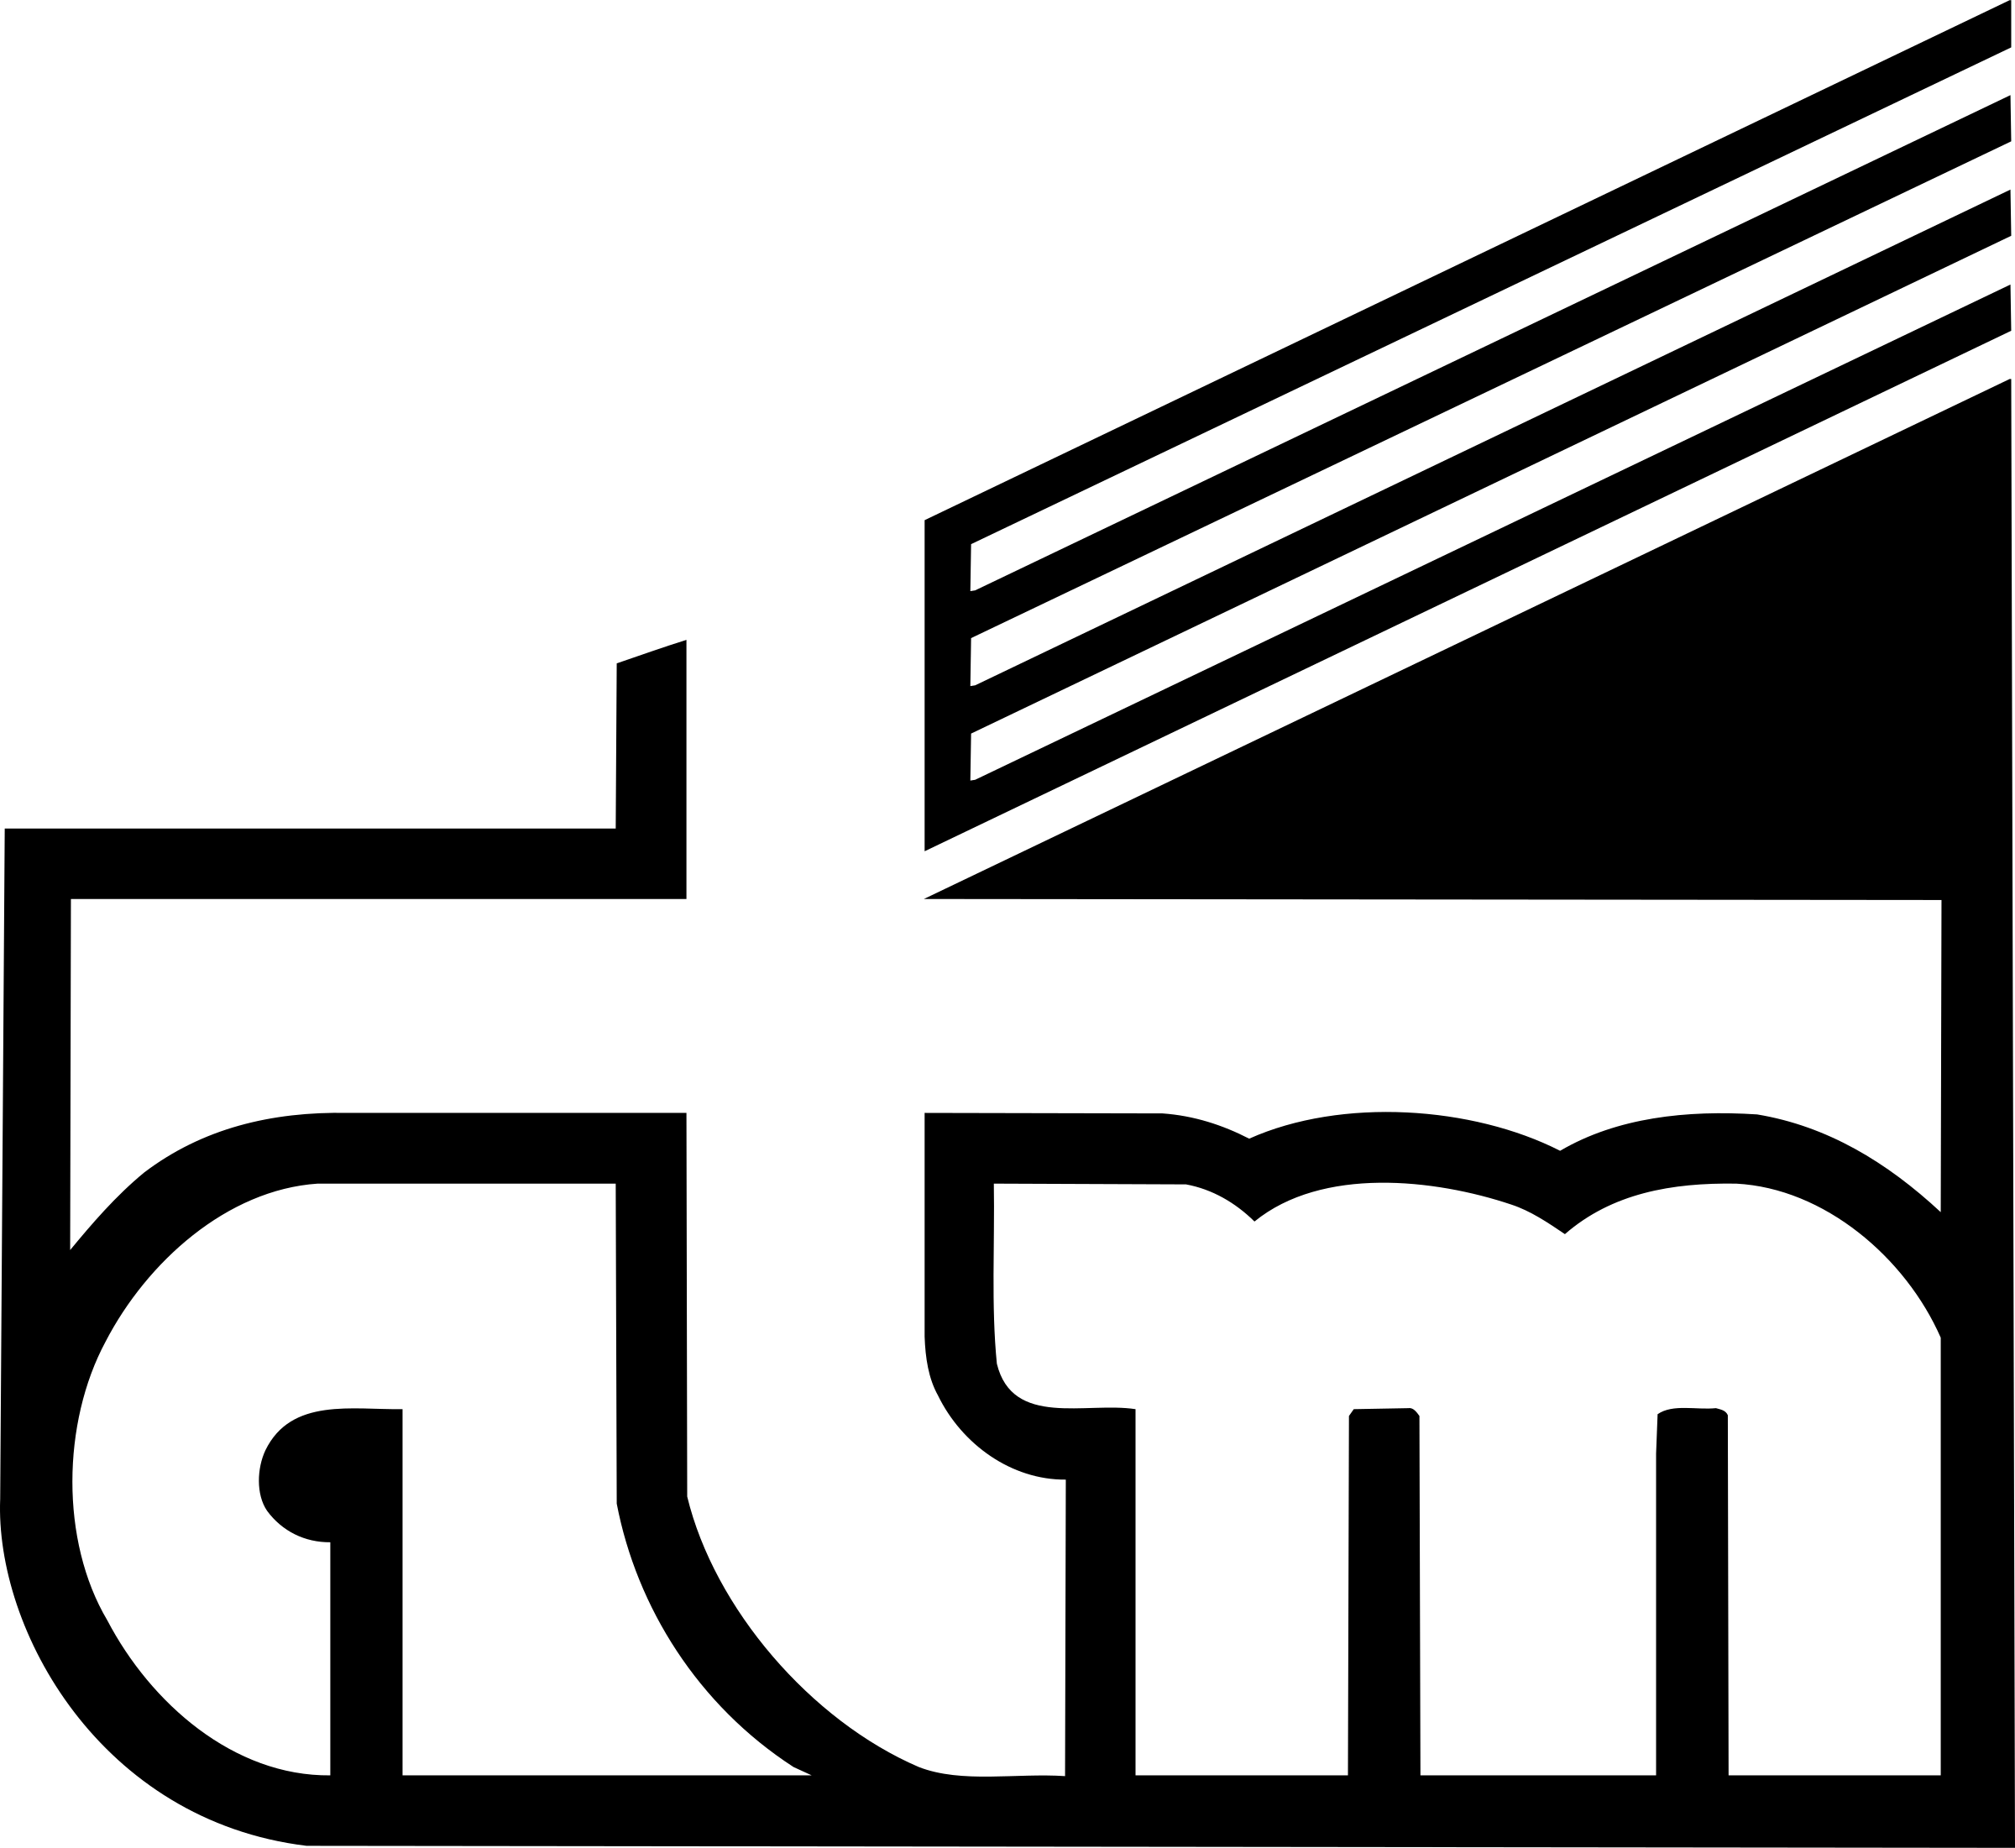 ATM Logo - ATM Logo PNG Transparent & SVG Vector - Freebie Supply